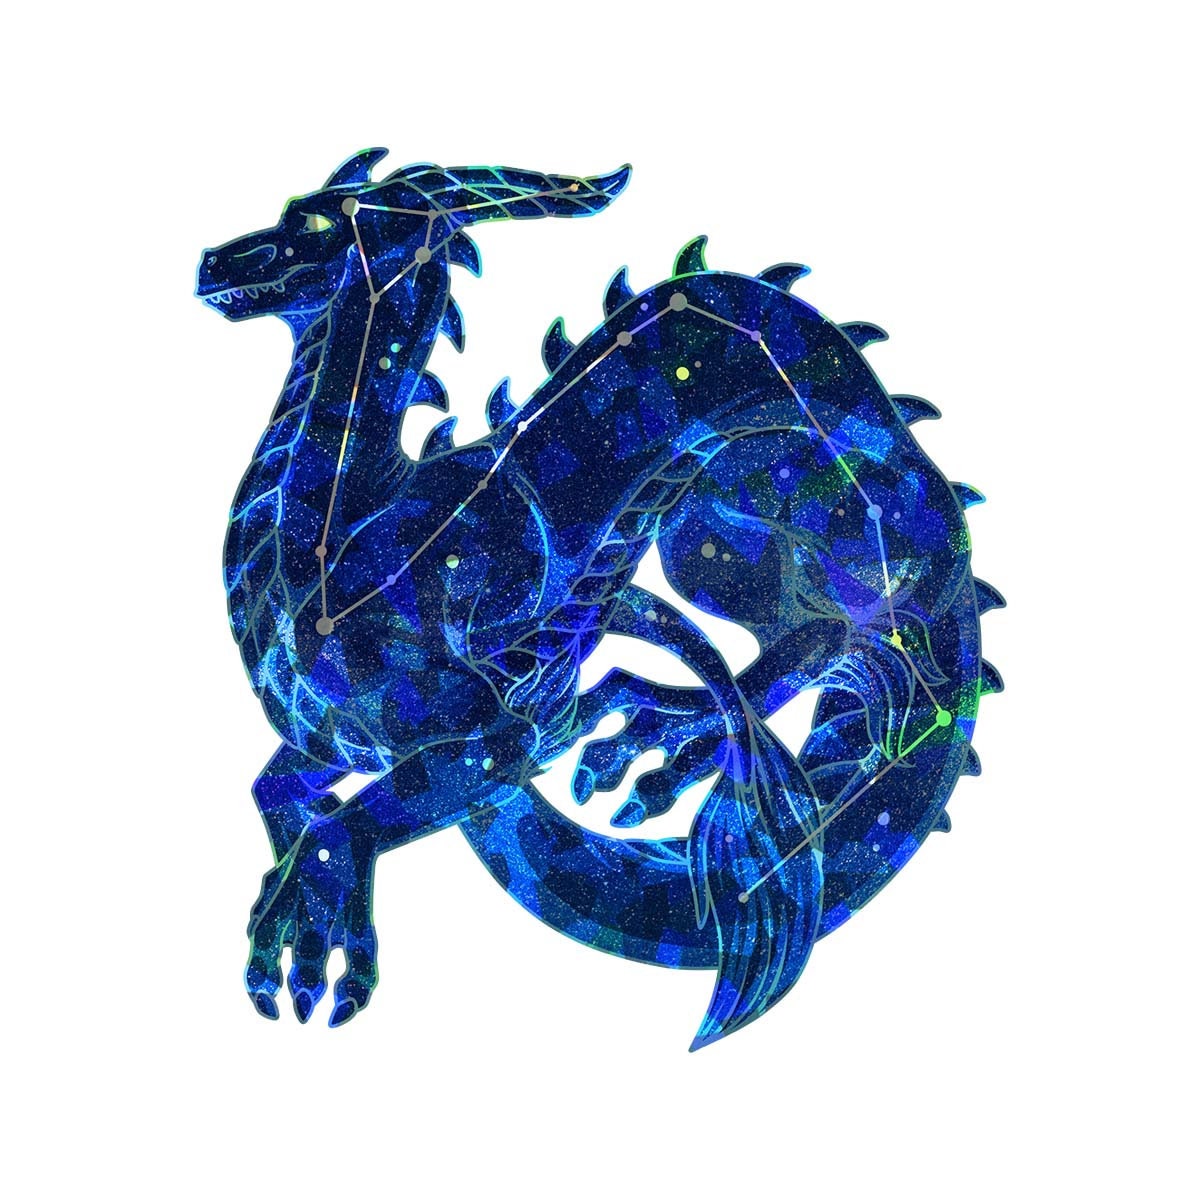 Знак зодиака рыба год дракона. Дракон Draco Созвездие. Символ созвездия дракон. Созвездие дракона тату. Созвездие дракона для детей.